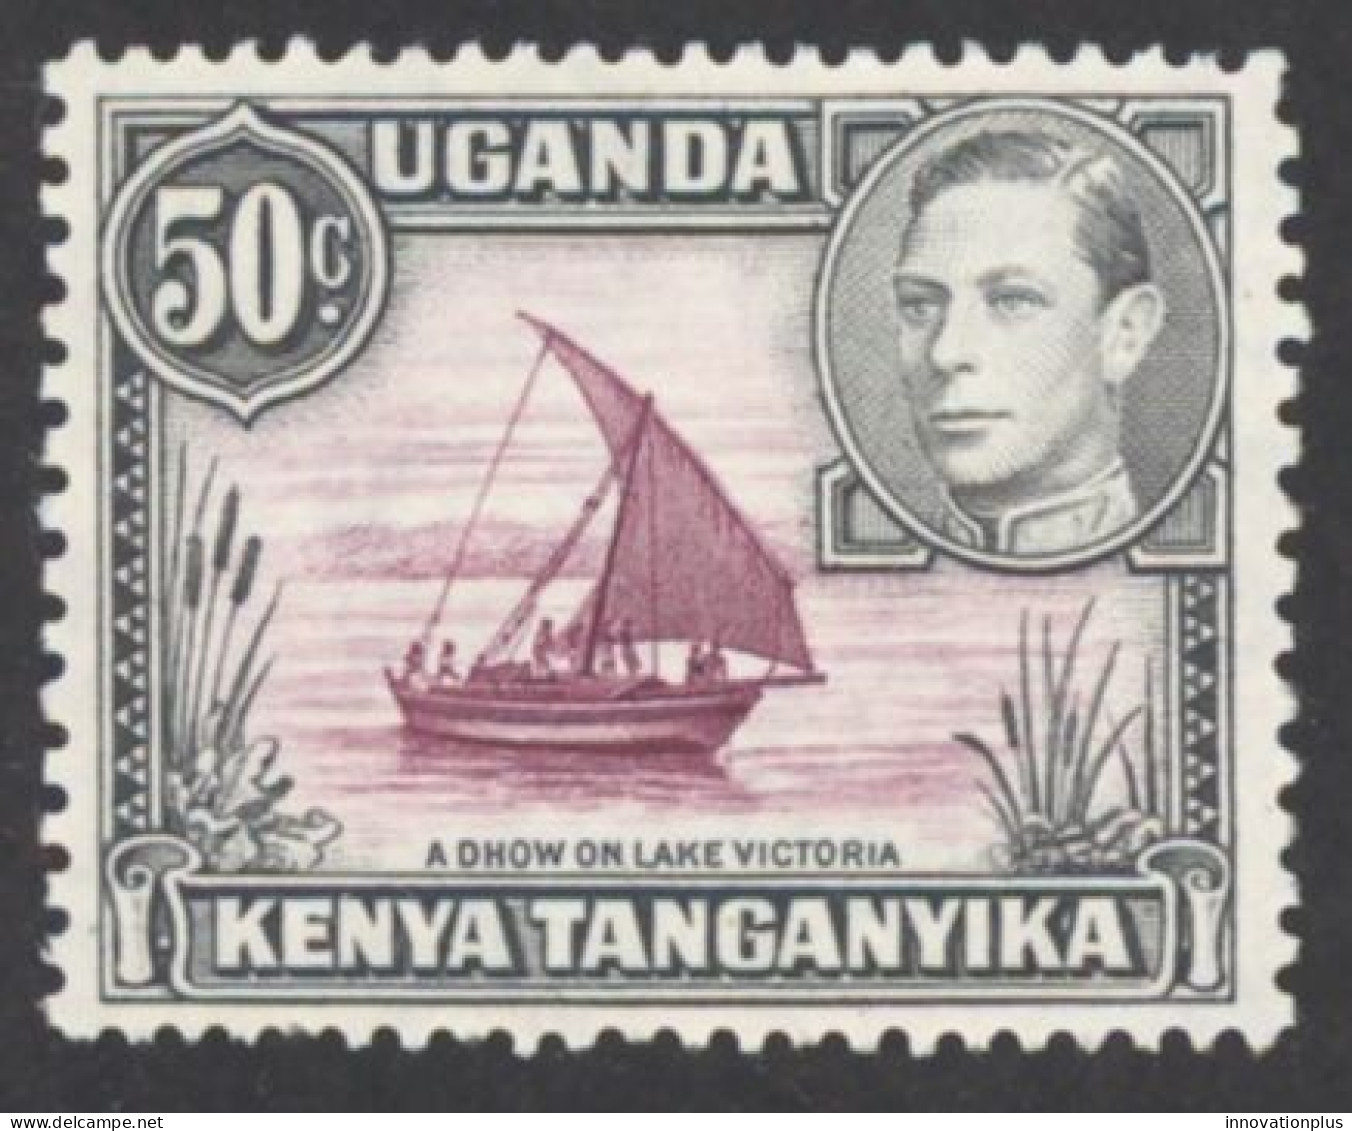 Kenya, Uganda, Tanzania Sc# 79a MH Perf 13X11½  1949 50c Definitives - Kenya, Uganda & Tanzania